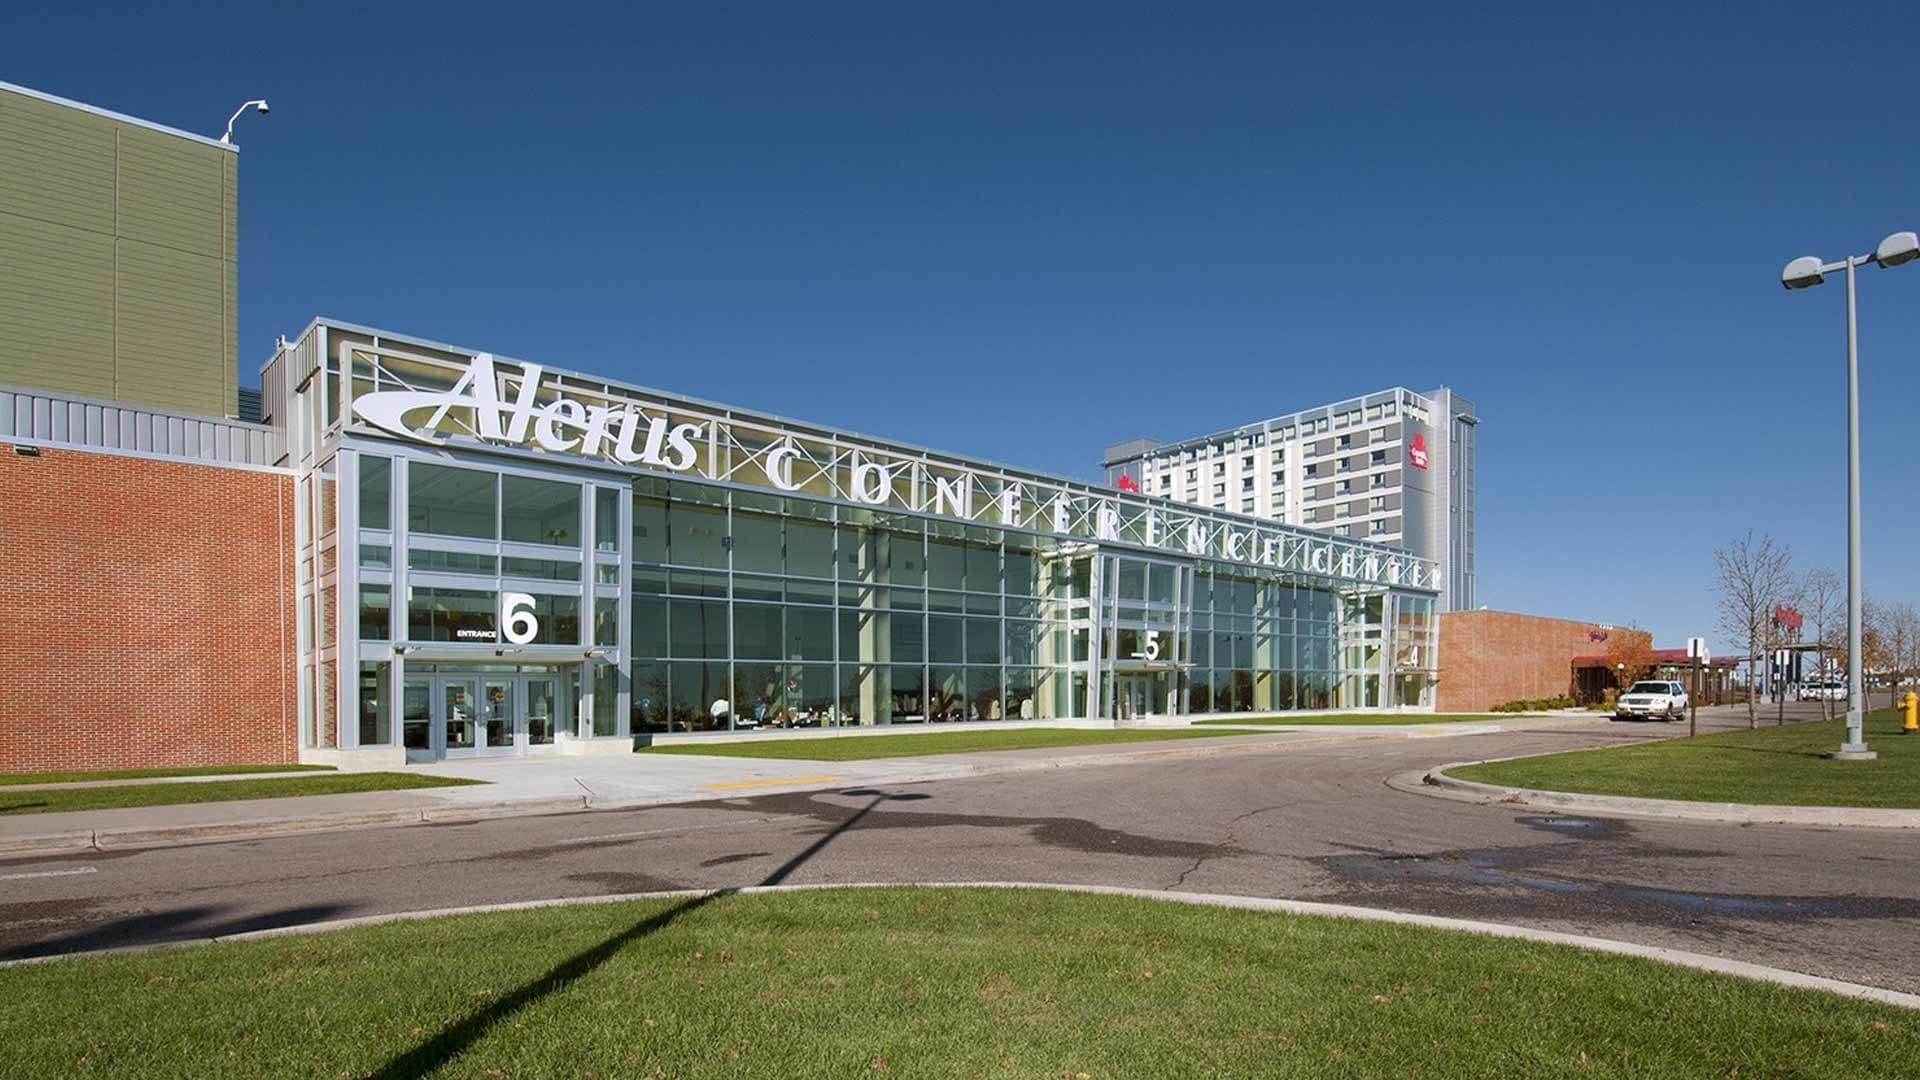 The Alerus Center